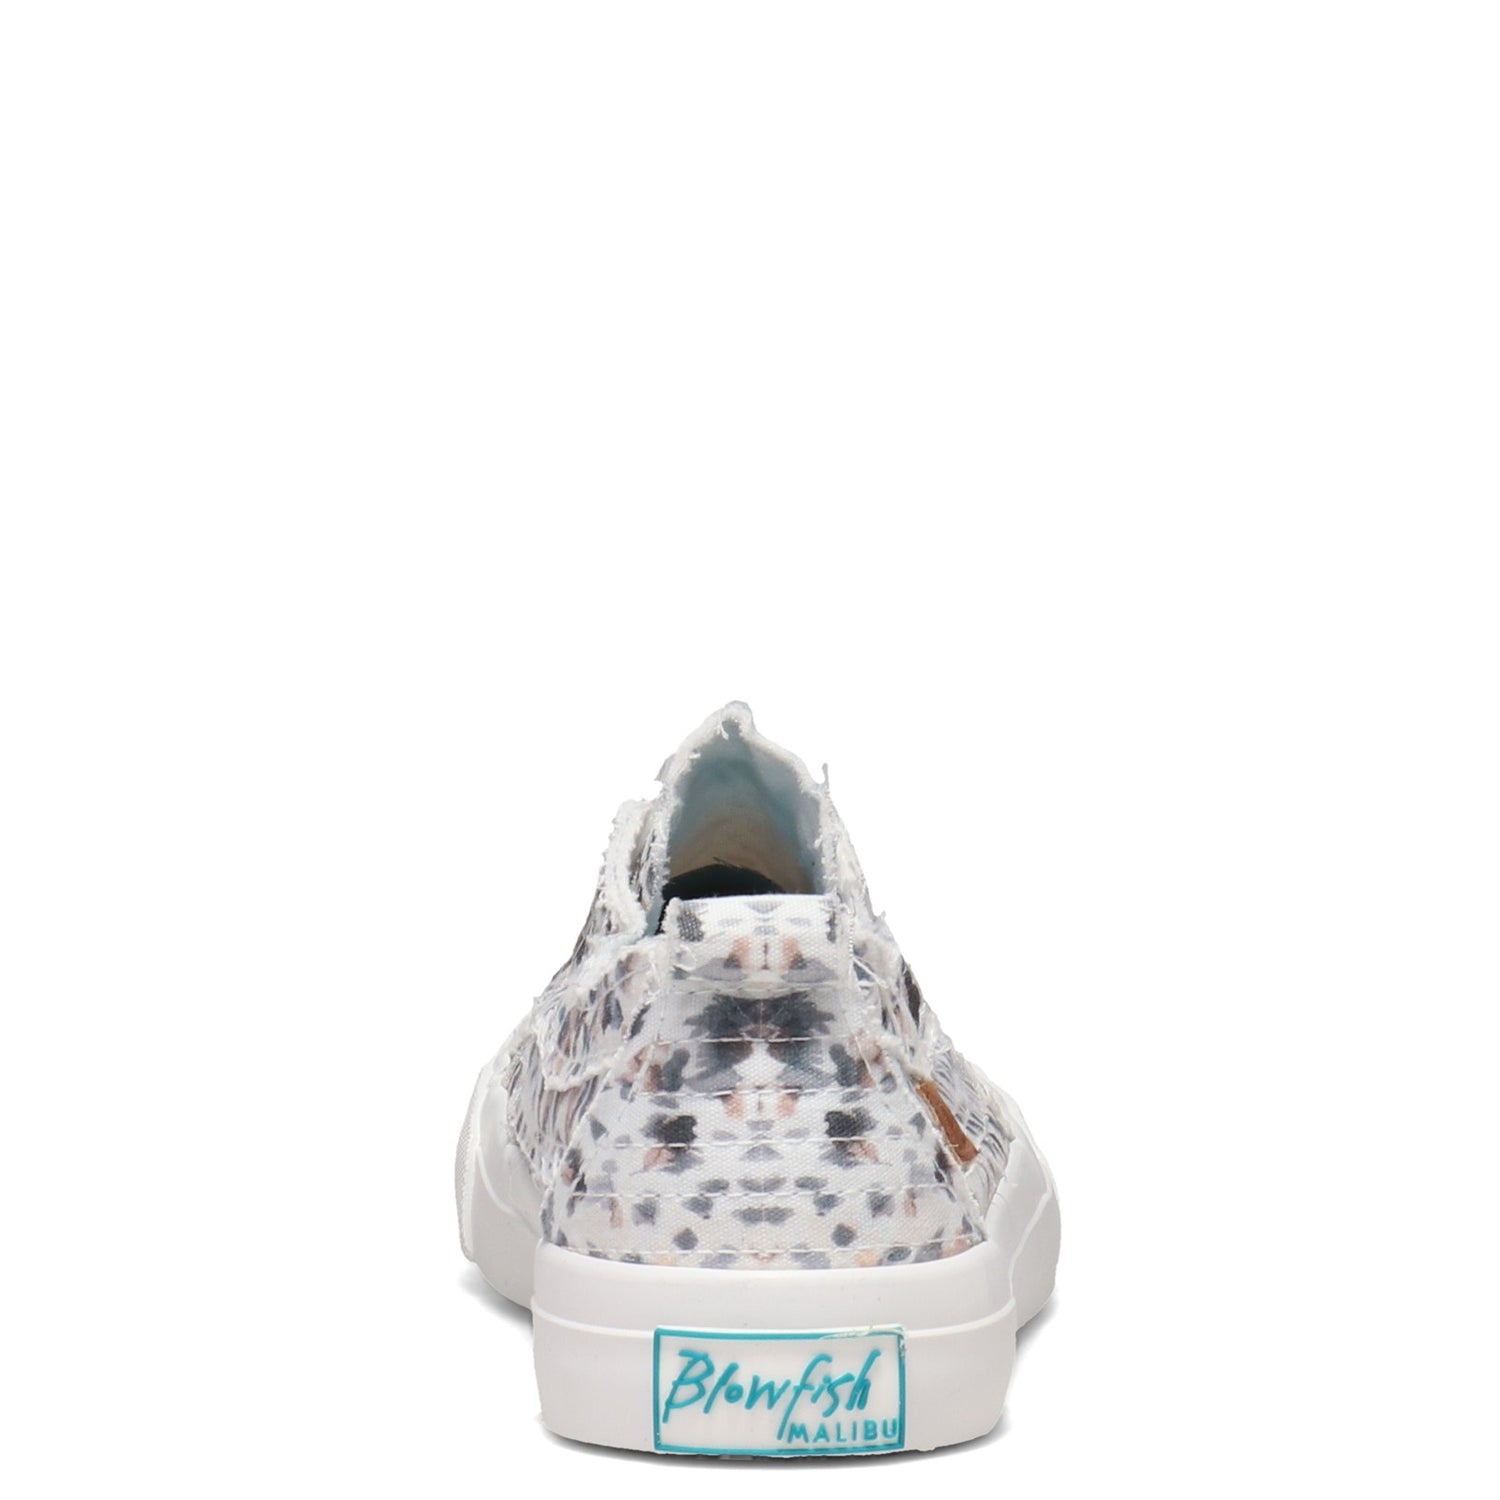 Peltz Shoes  Women's Blowfish Malibu Play Sneaker WHITE TAN GREY ZS-0061-141